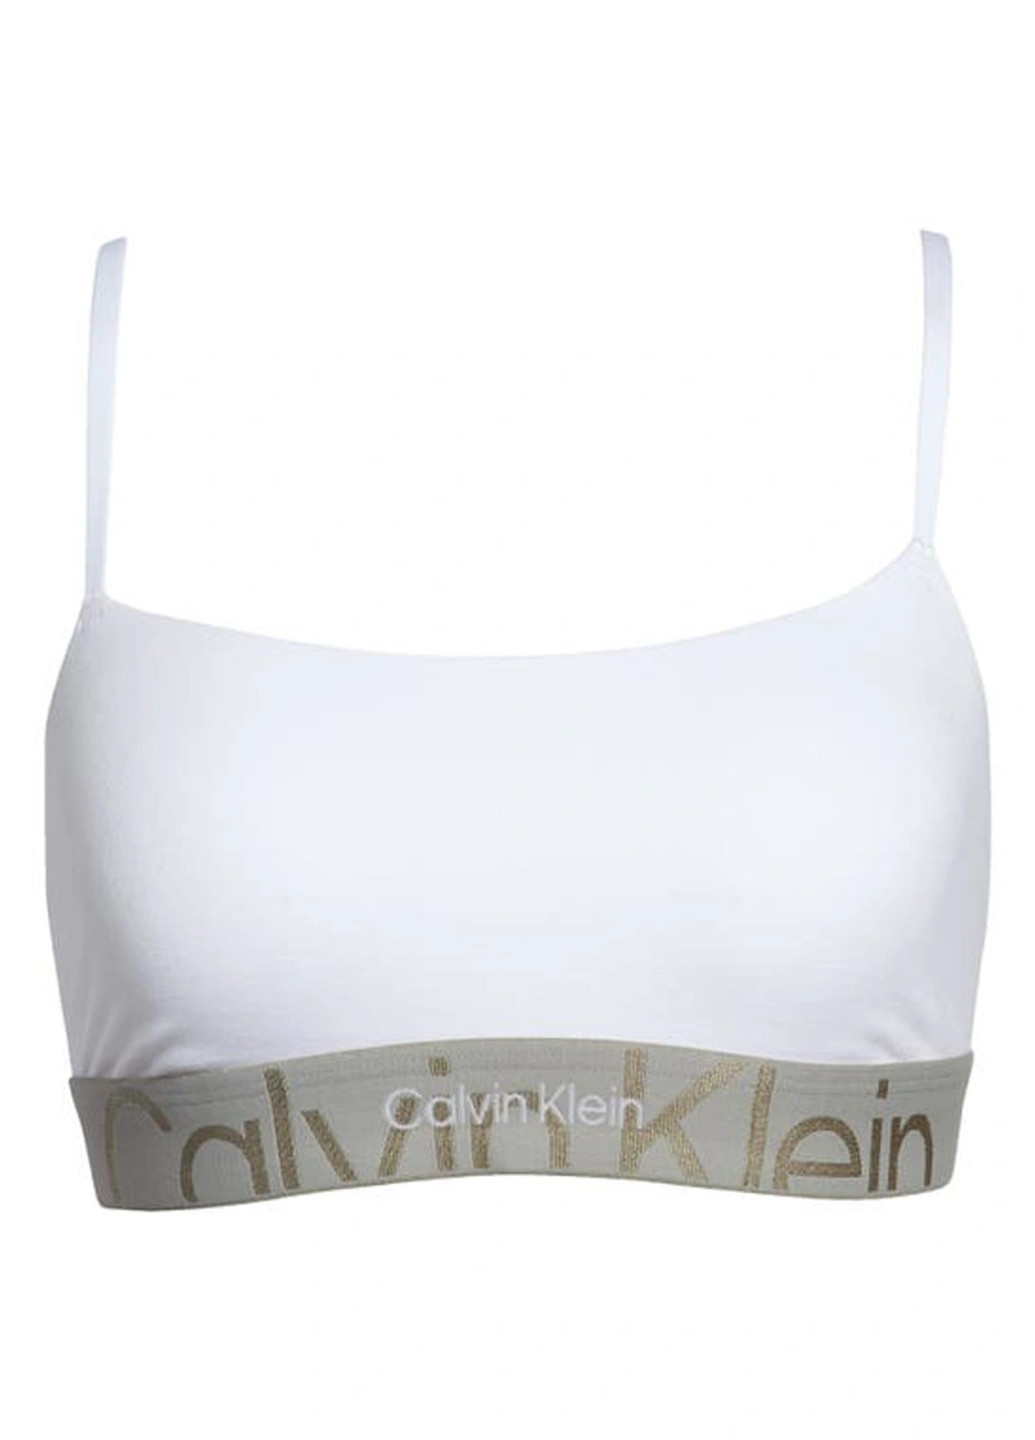 Белый топ бюстгальтер Calvin Klein без косточек хлопок, трикотаж